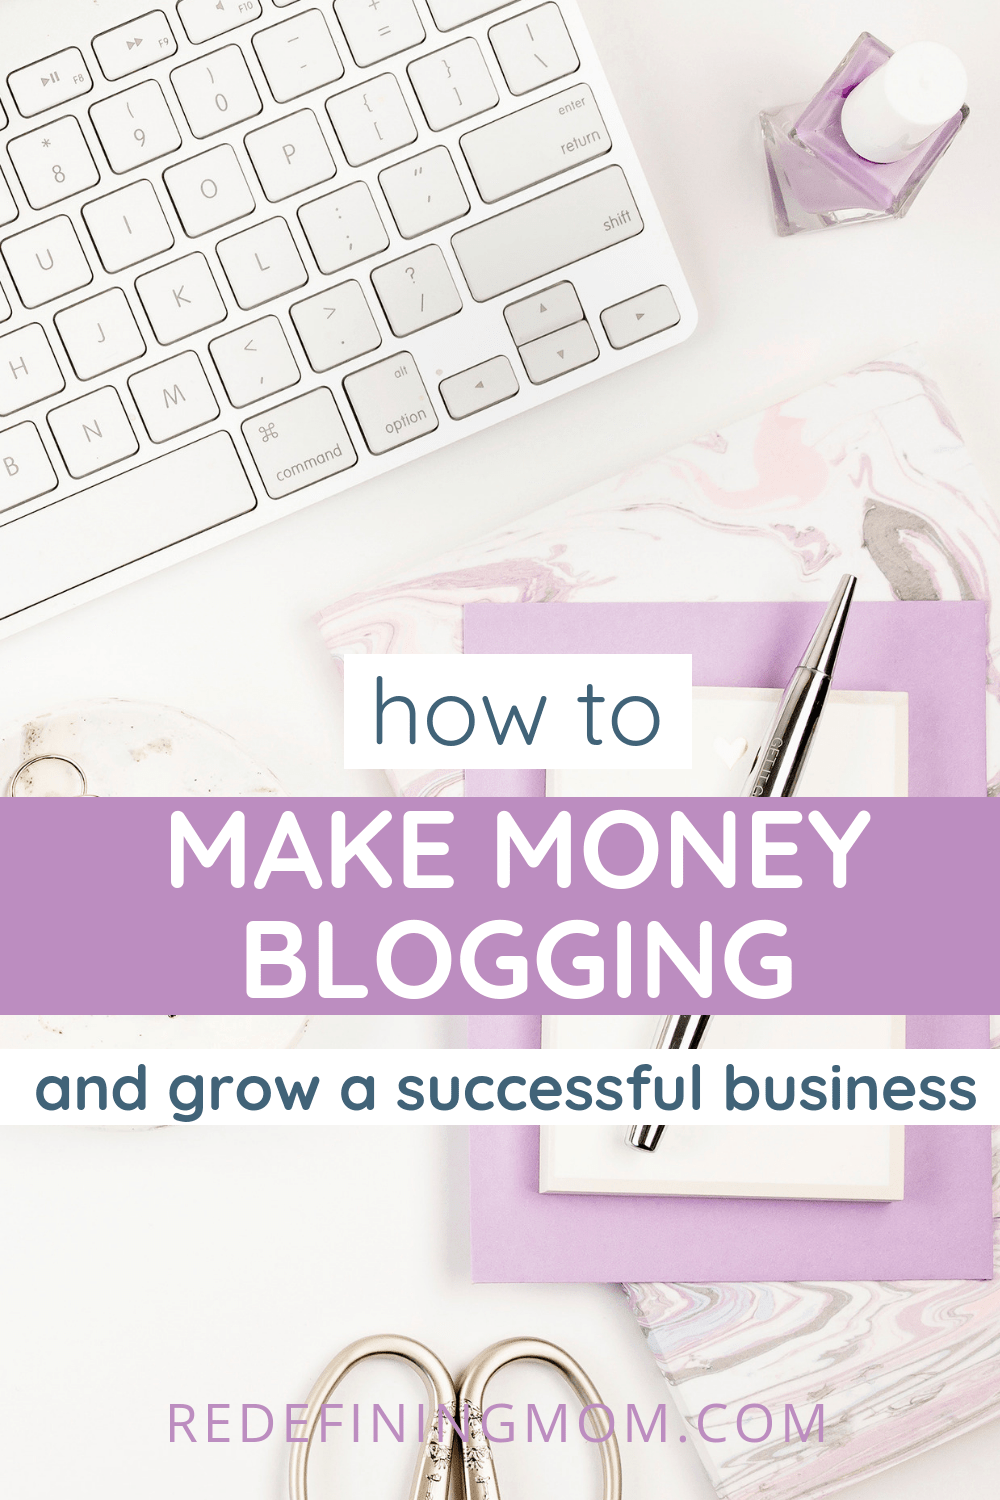 Desktop flatlay to represent how to make money blogging